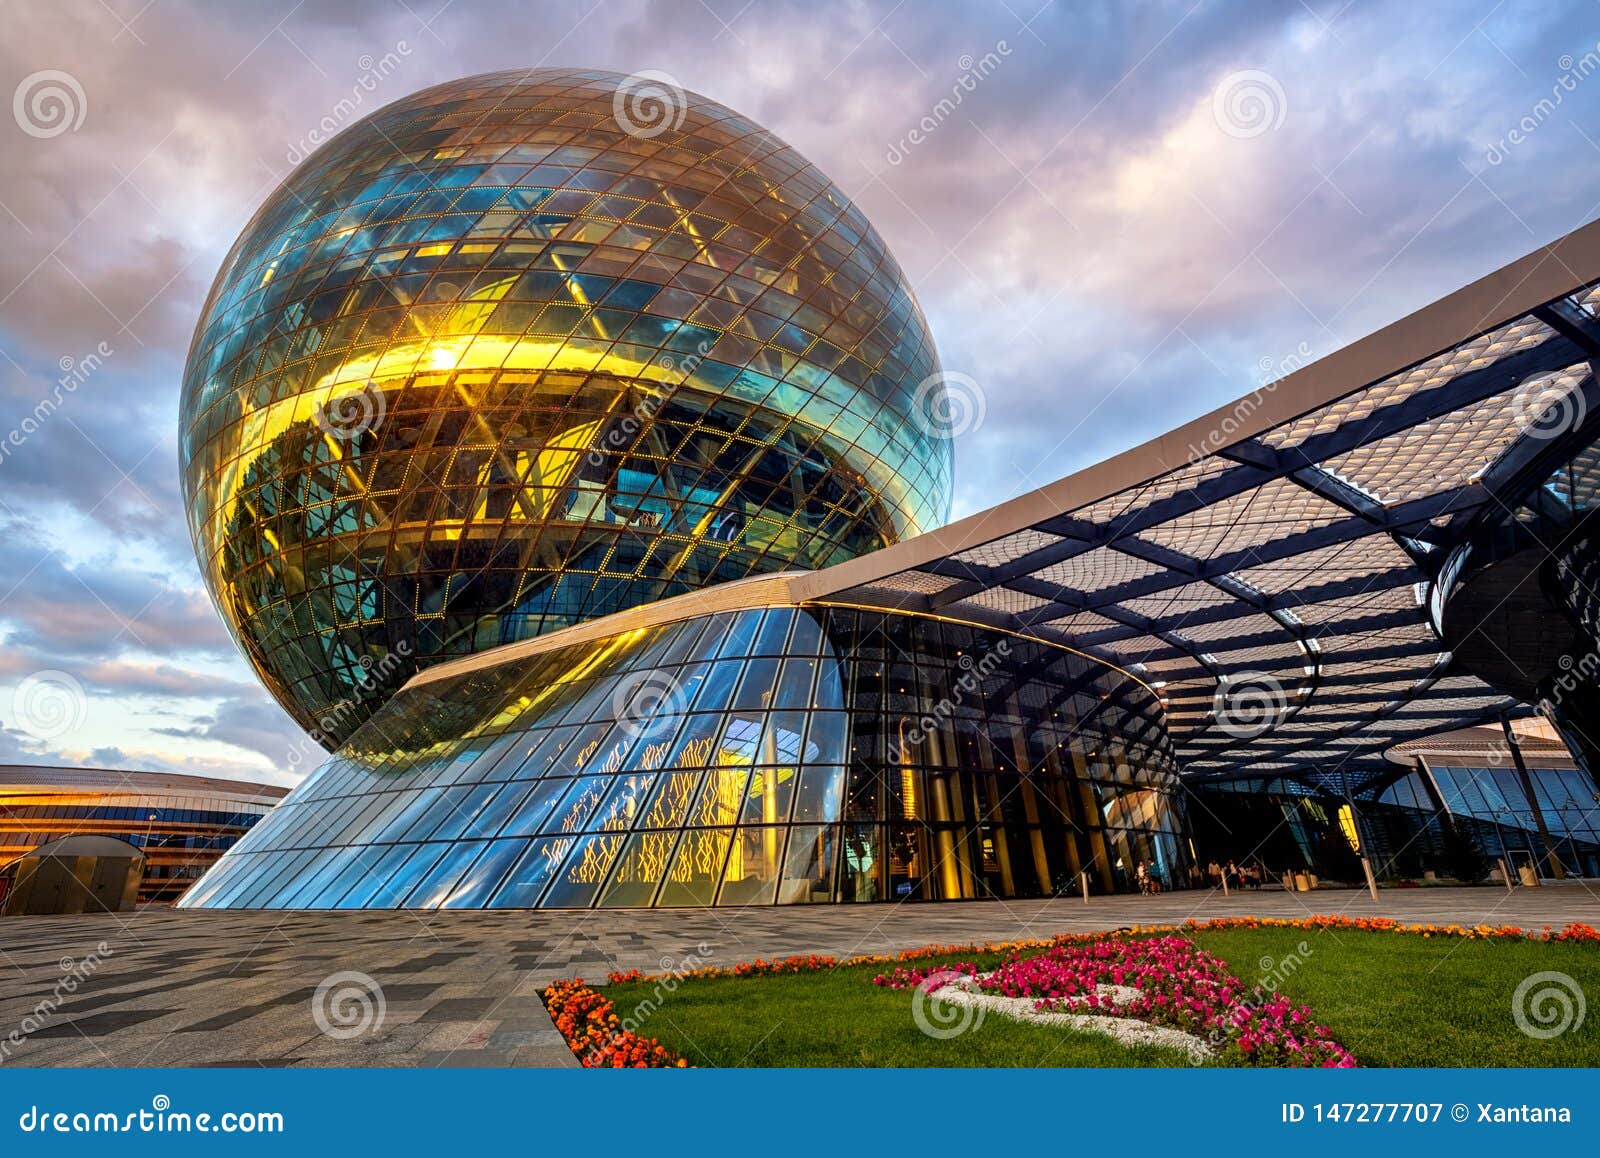 astana, kazakhstan, the modernist glass sphere of nur alem pavilion